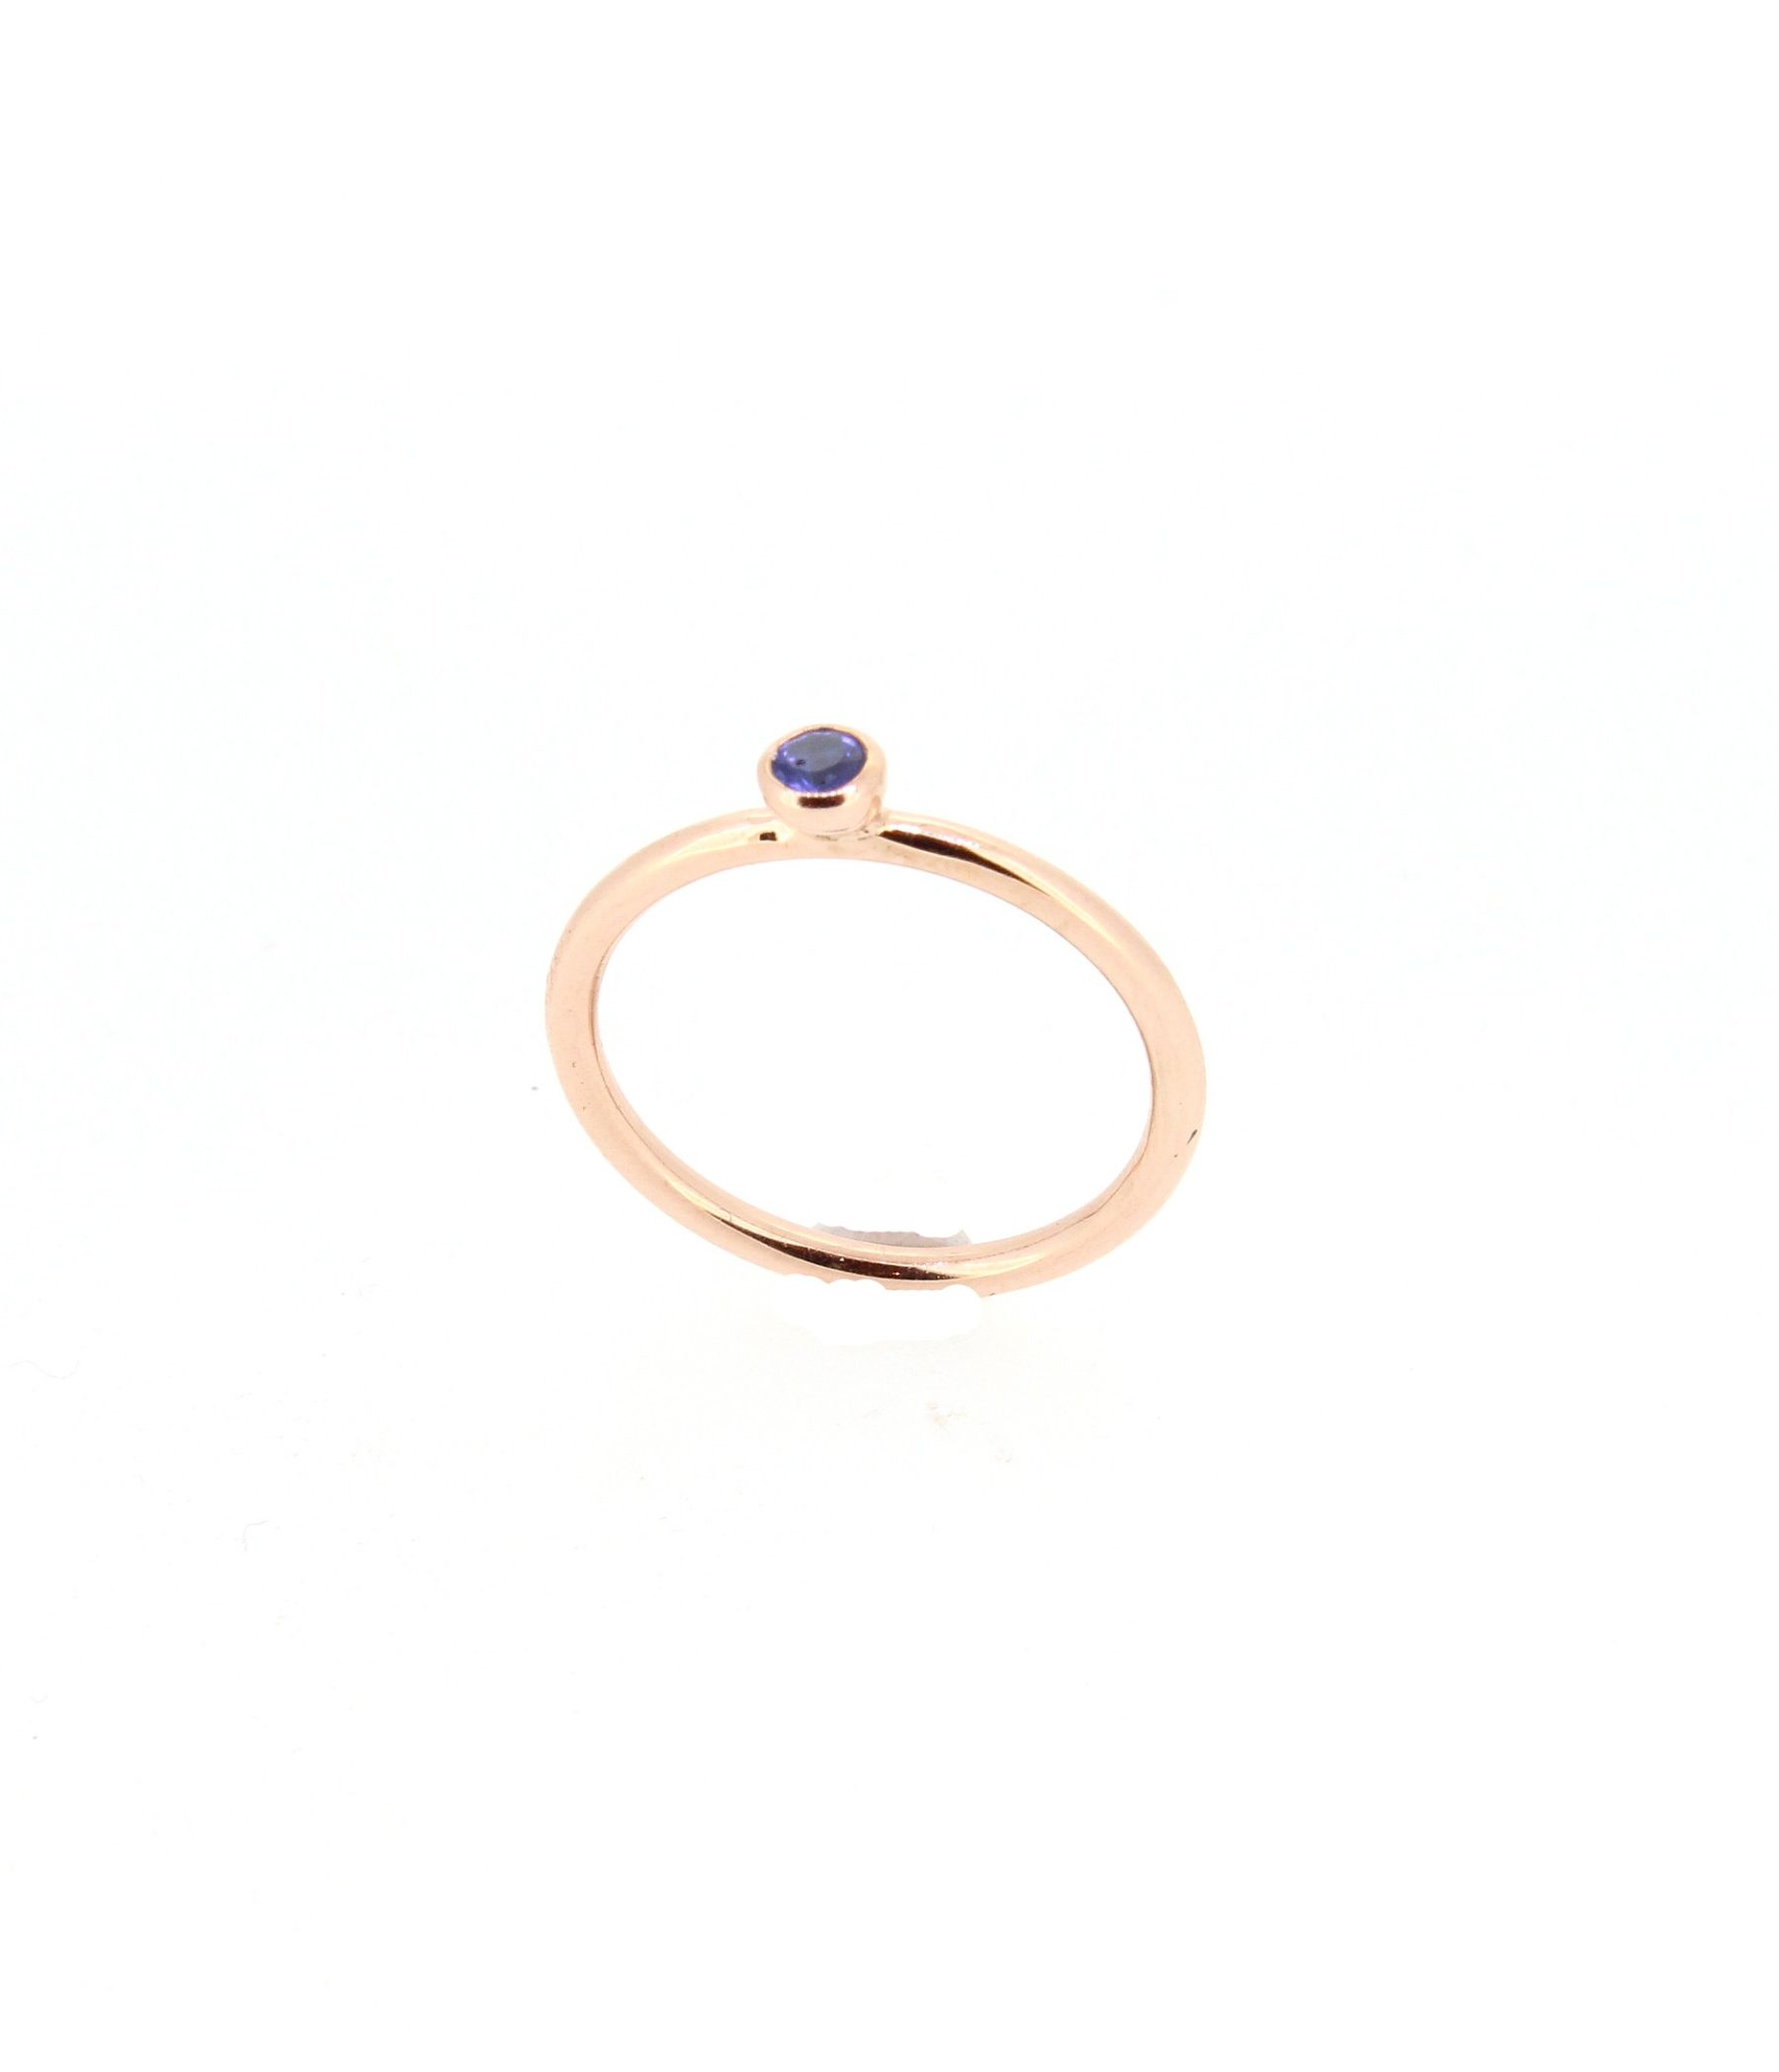 Ring Saphir blau 18kt Roségold - Lefteris Margaritis - RGS003rbs